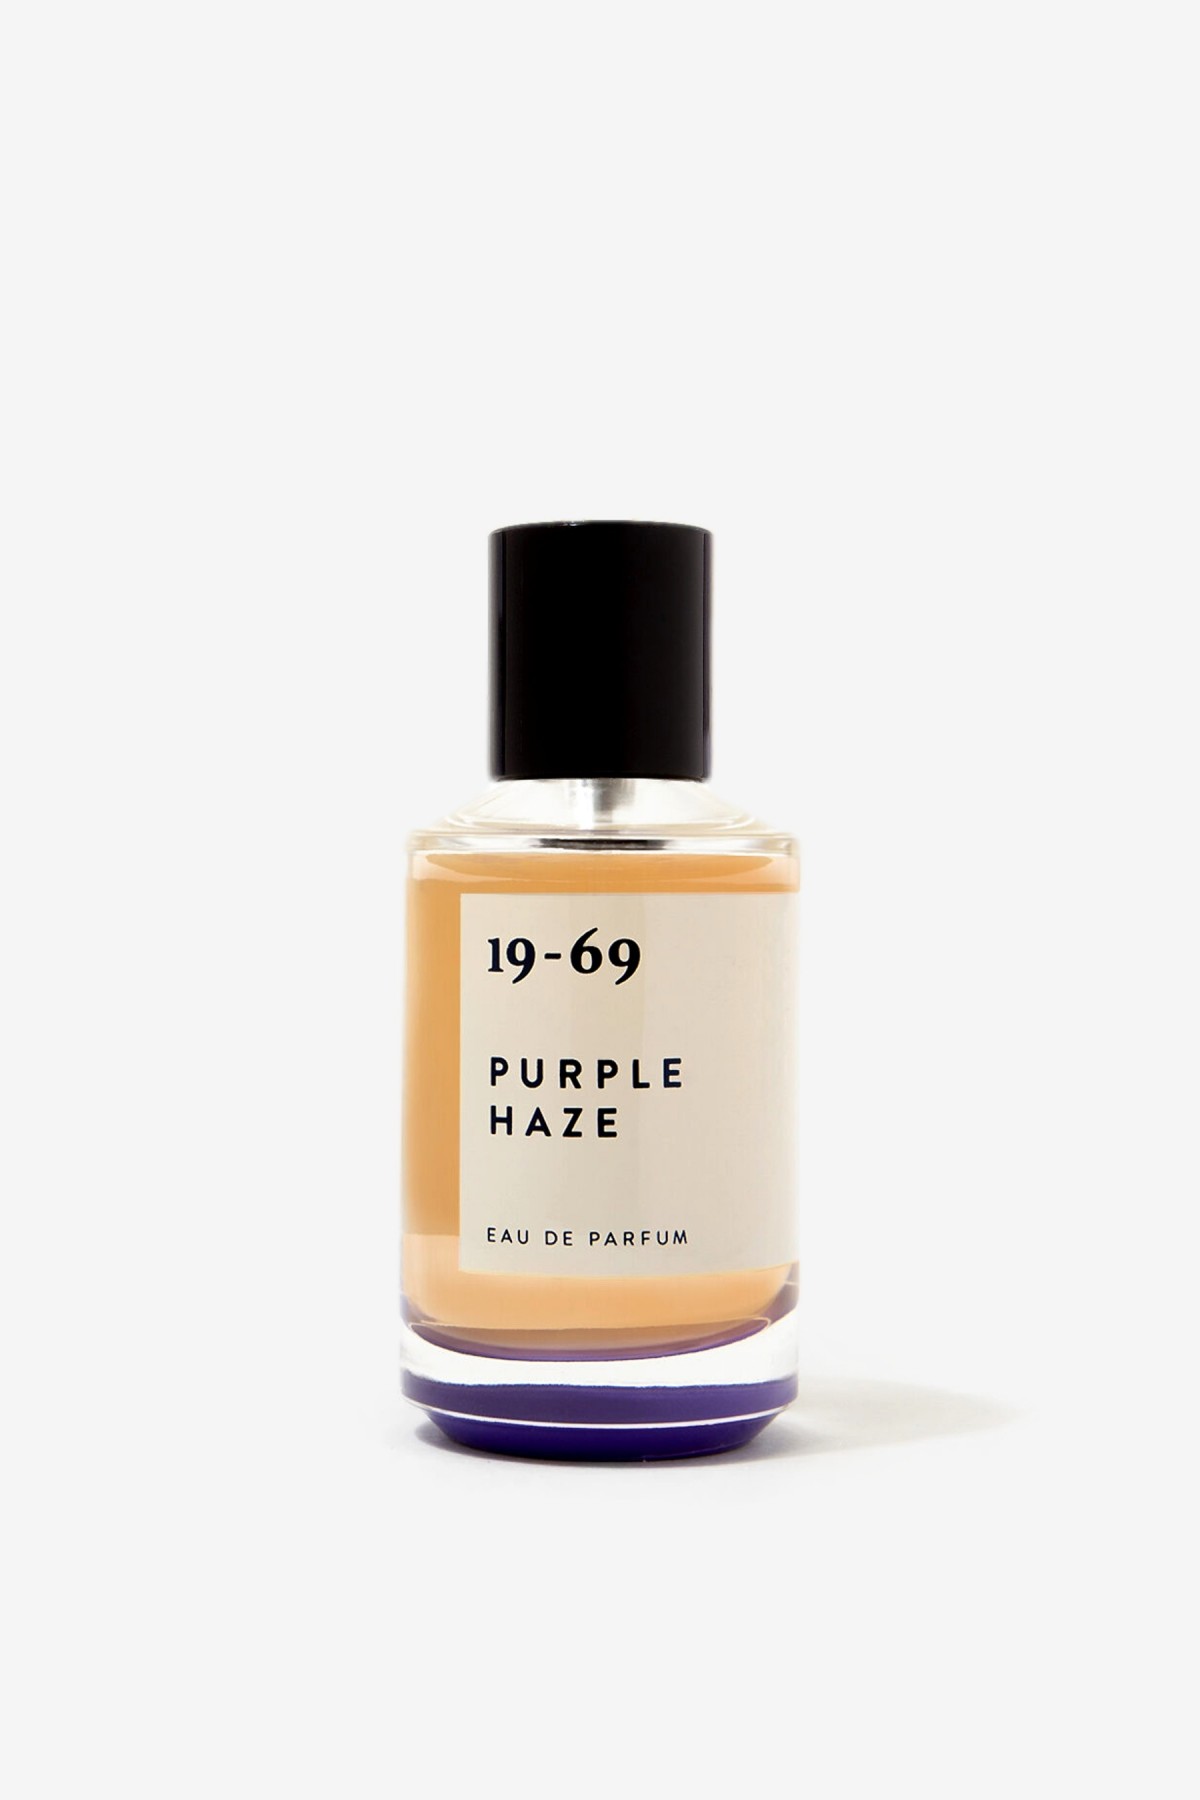 19-69 Purple Haze Eau de Parfum in 100ml